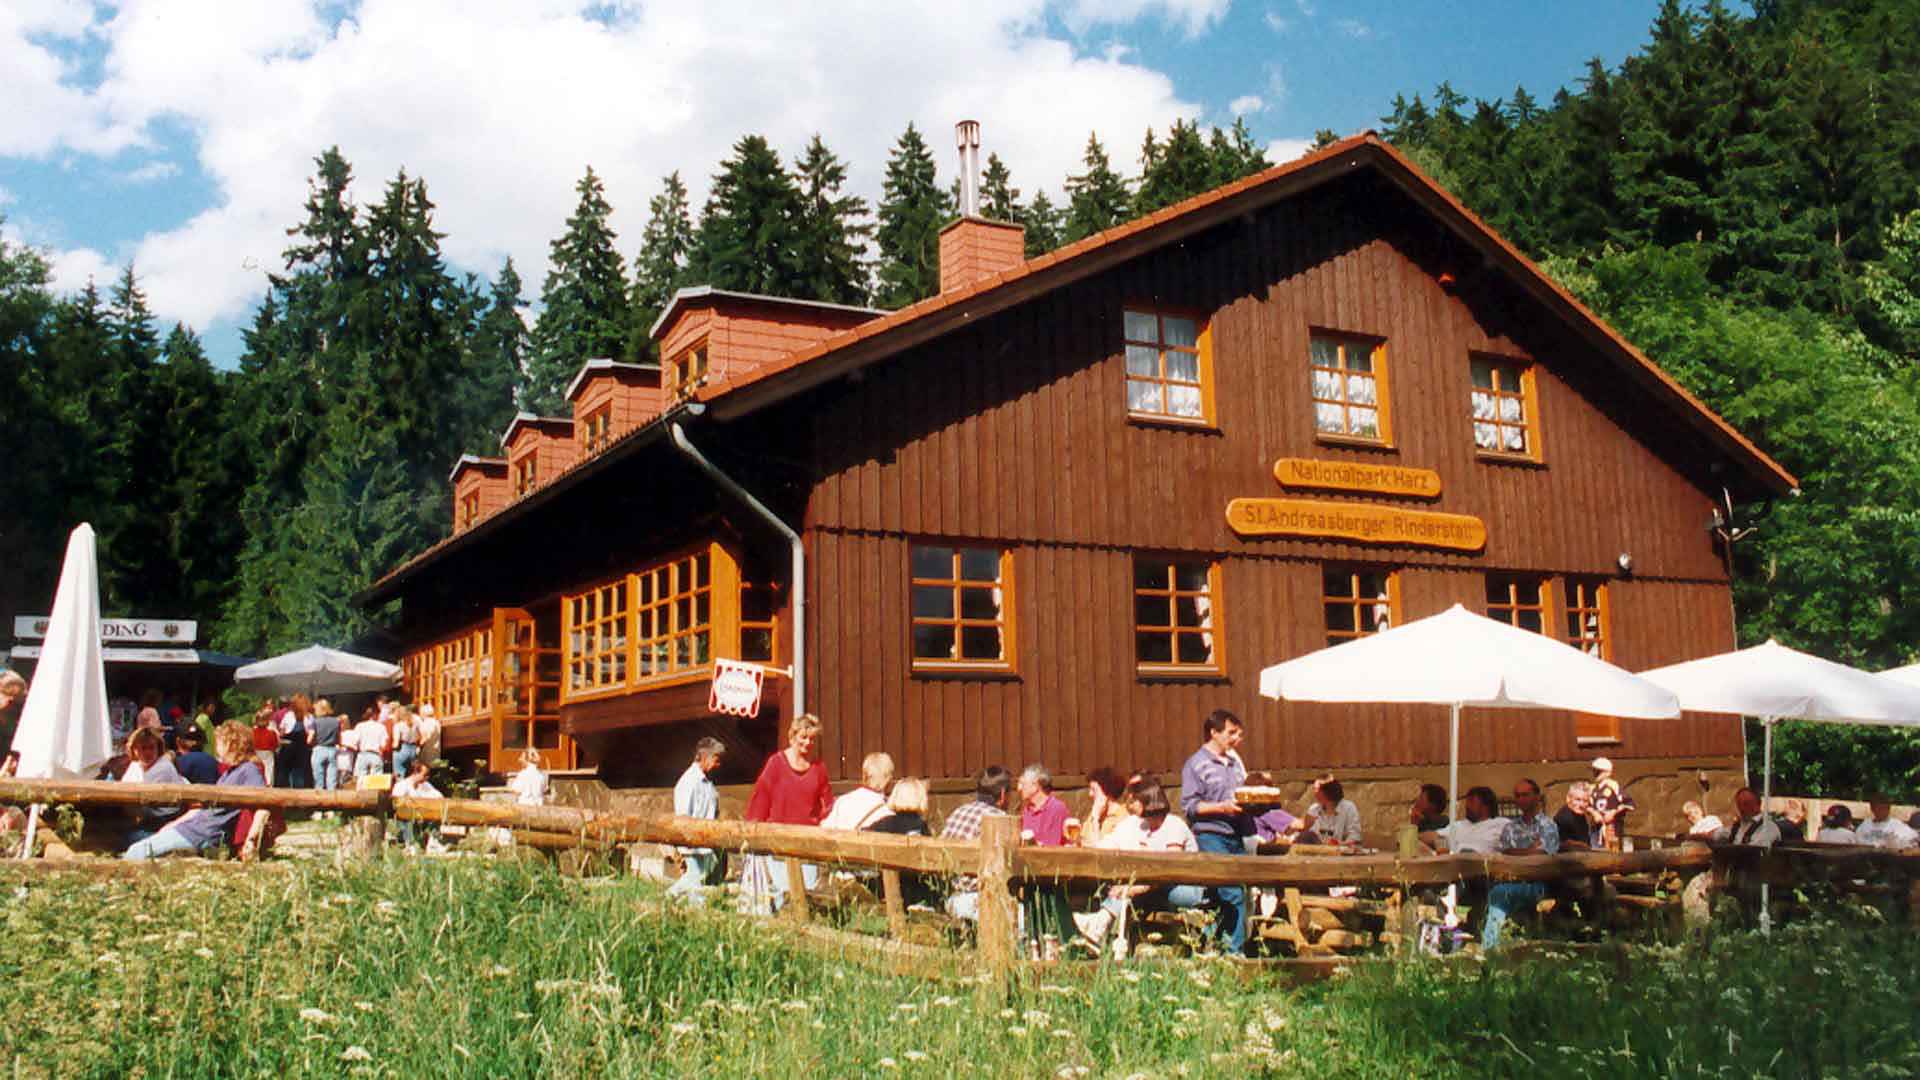 Ausflugsgastätte Rinderstall bei Sankt Andreasberg